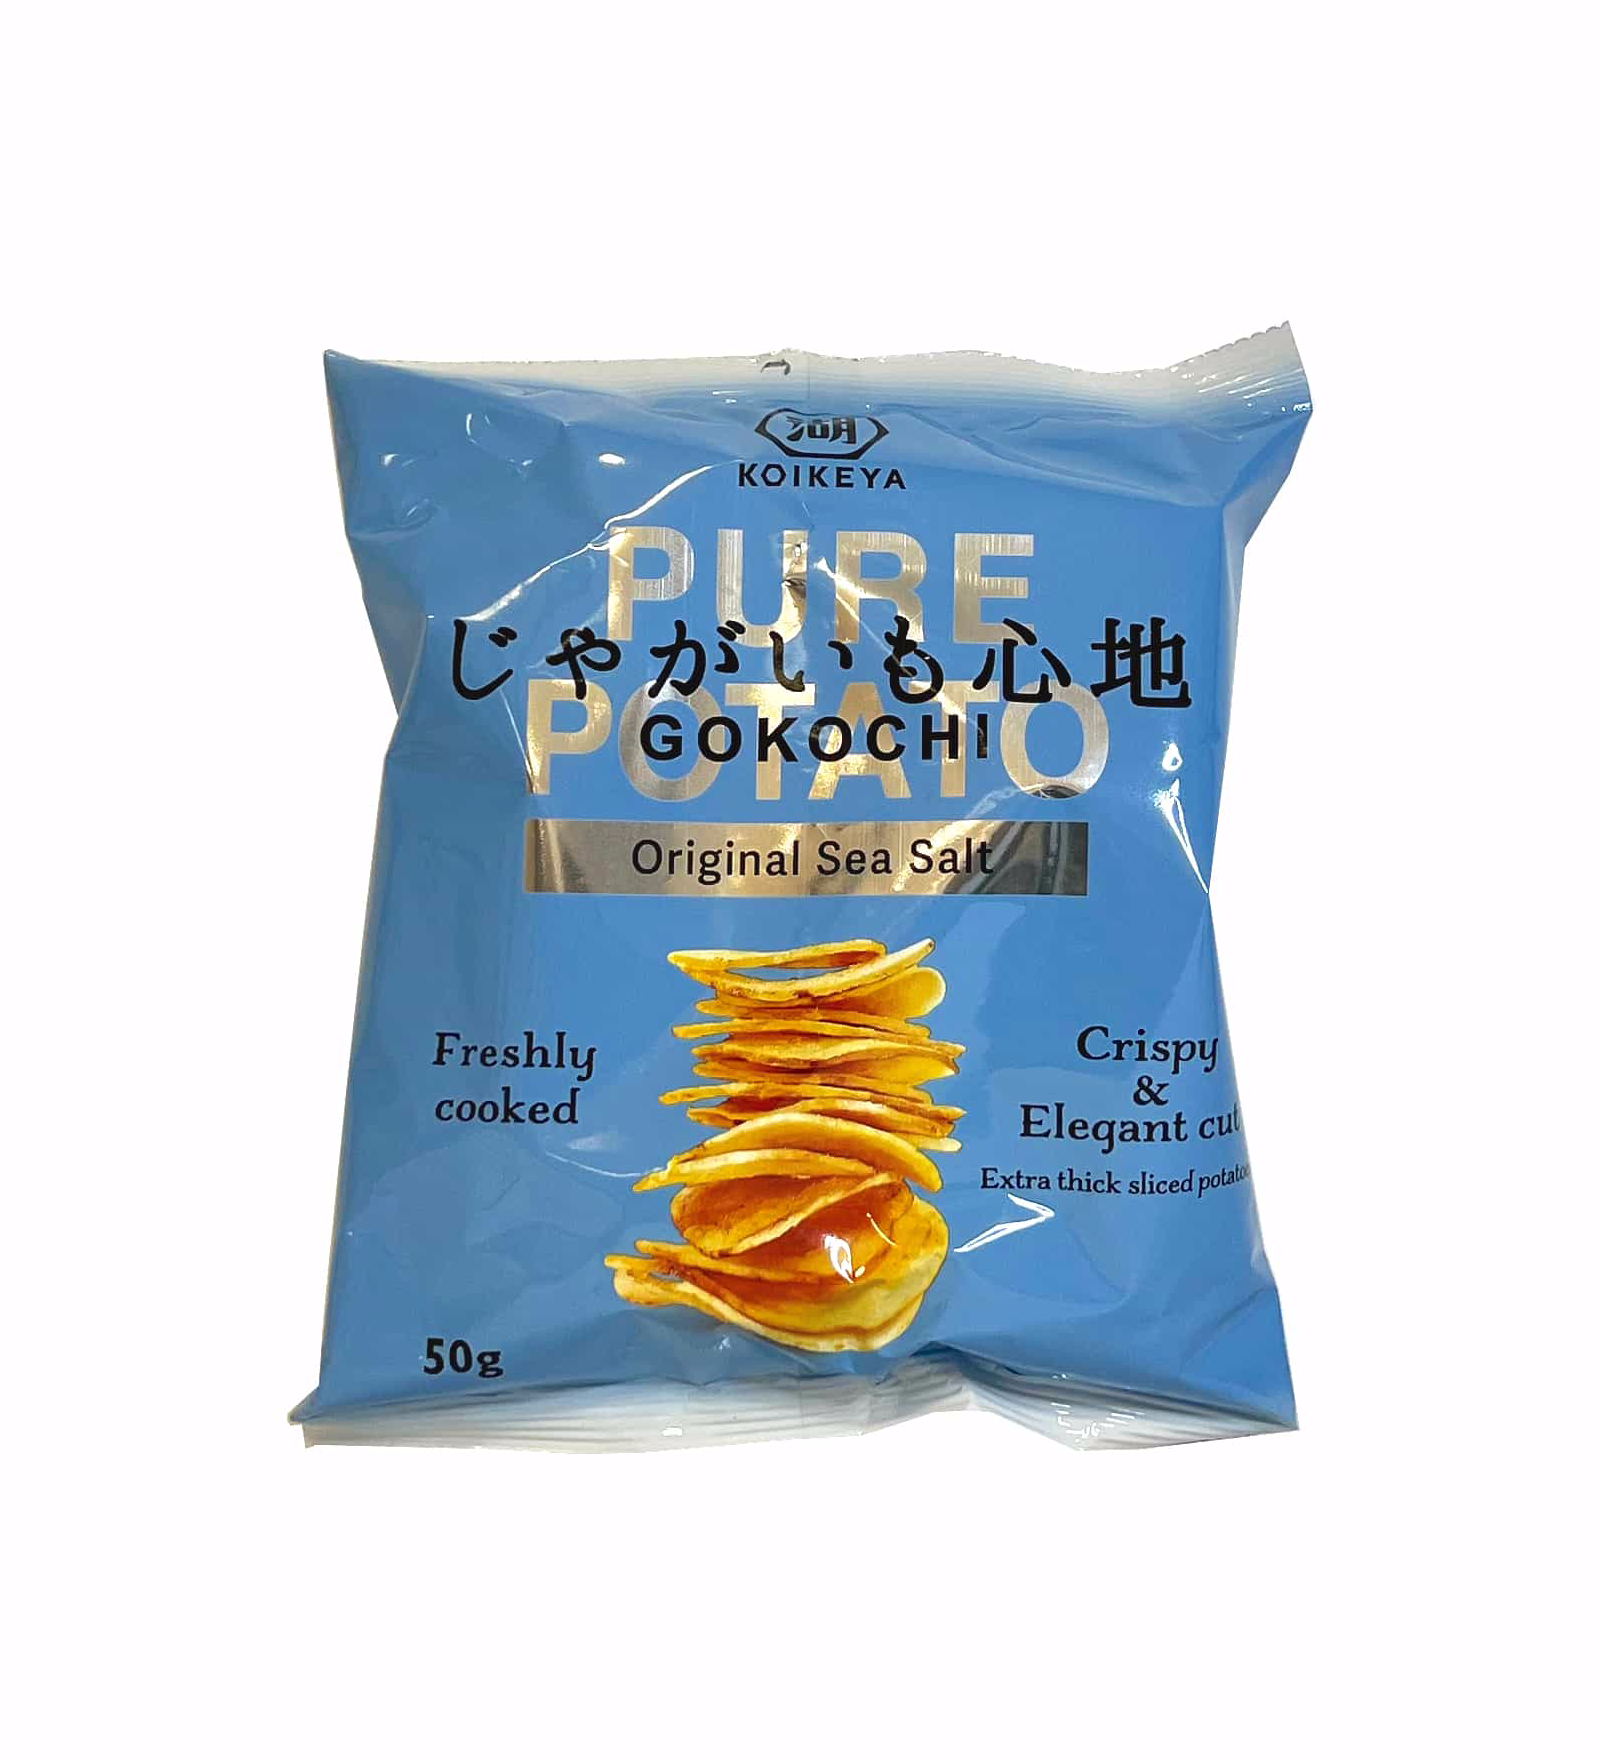 Crispy Potato Chips Gokochi Original Sea Salt 50g Koikeya Japan